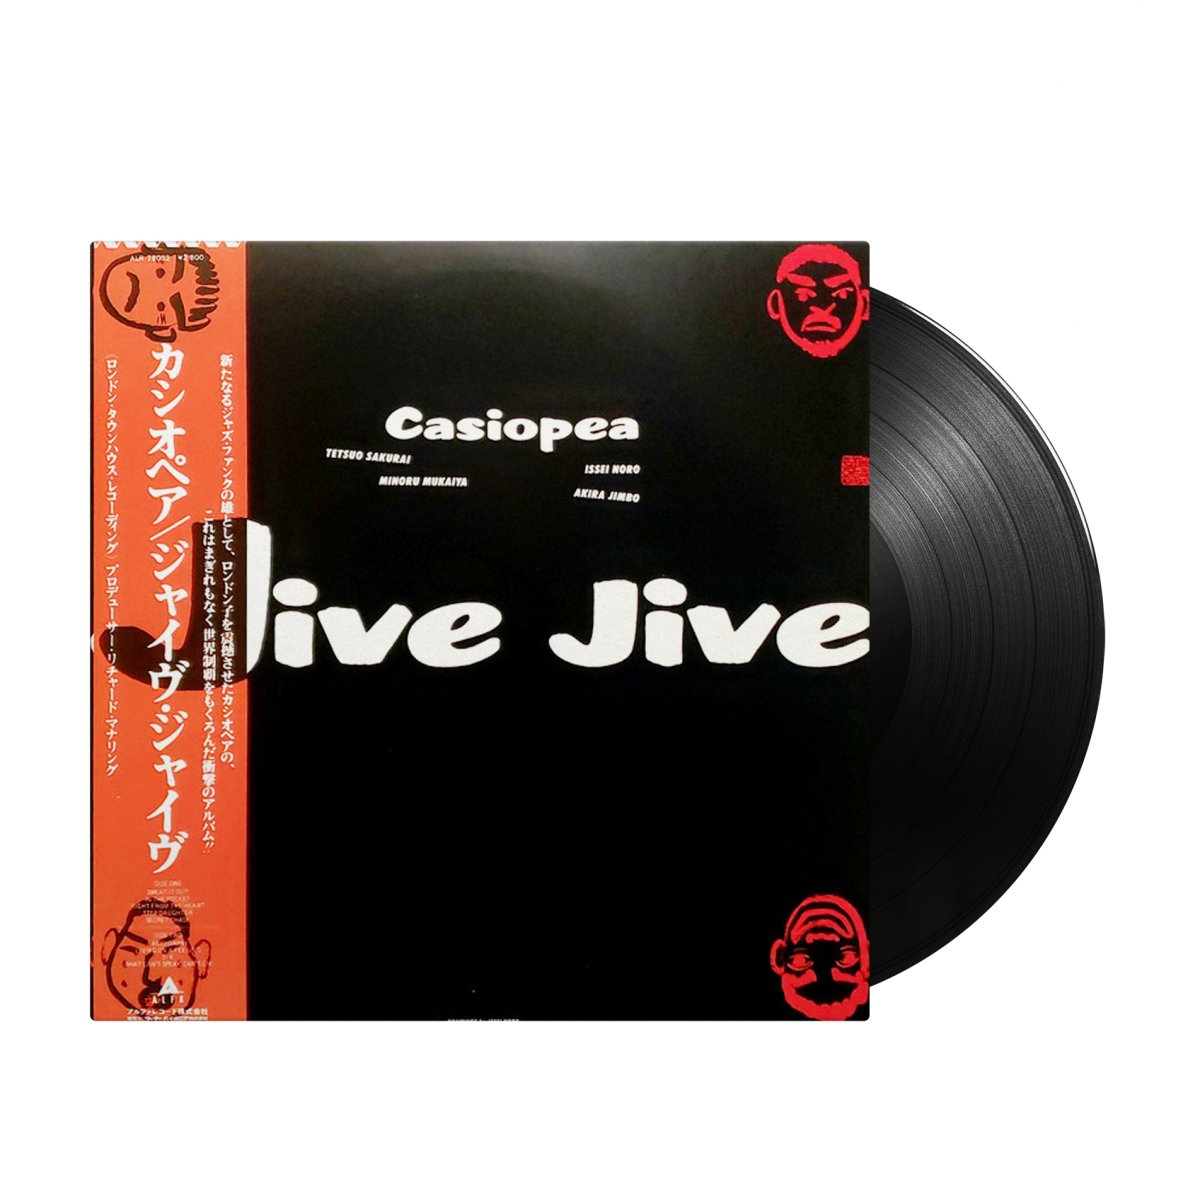 Casiopea - Jive Jive (Japan Import) - Inner Ocean Records